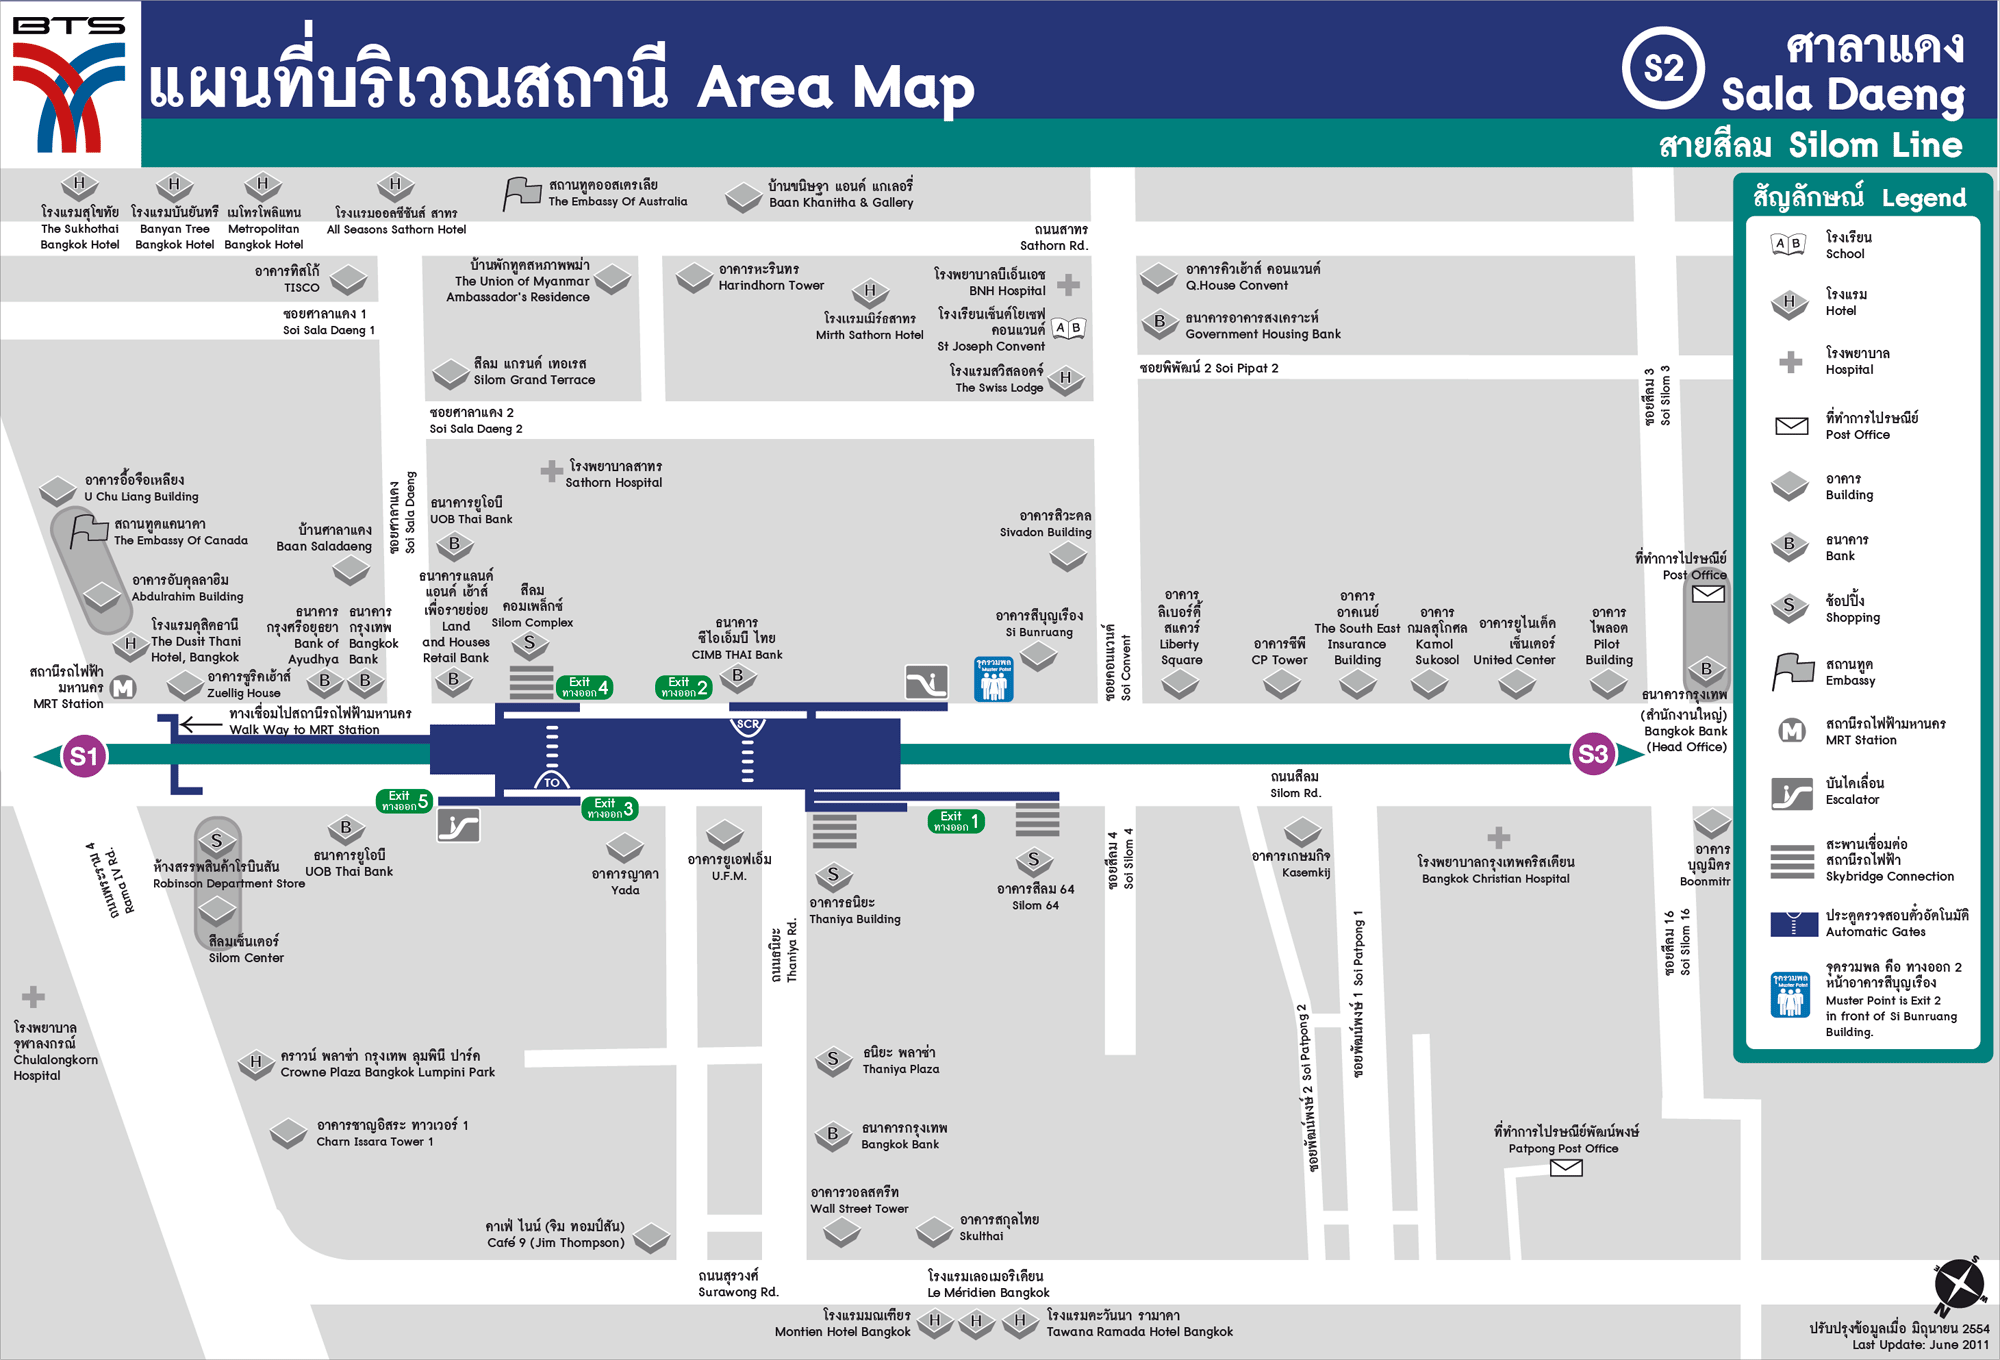 Карта бангкок банка. Карта Бангкок банк. Карта метро Бангкока. Amara Bangkok Hotel на карте Бангкока. MBK Bangkok на карте.